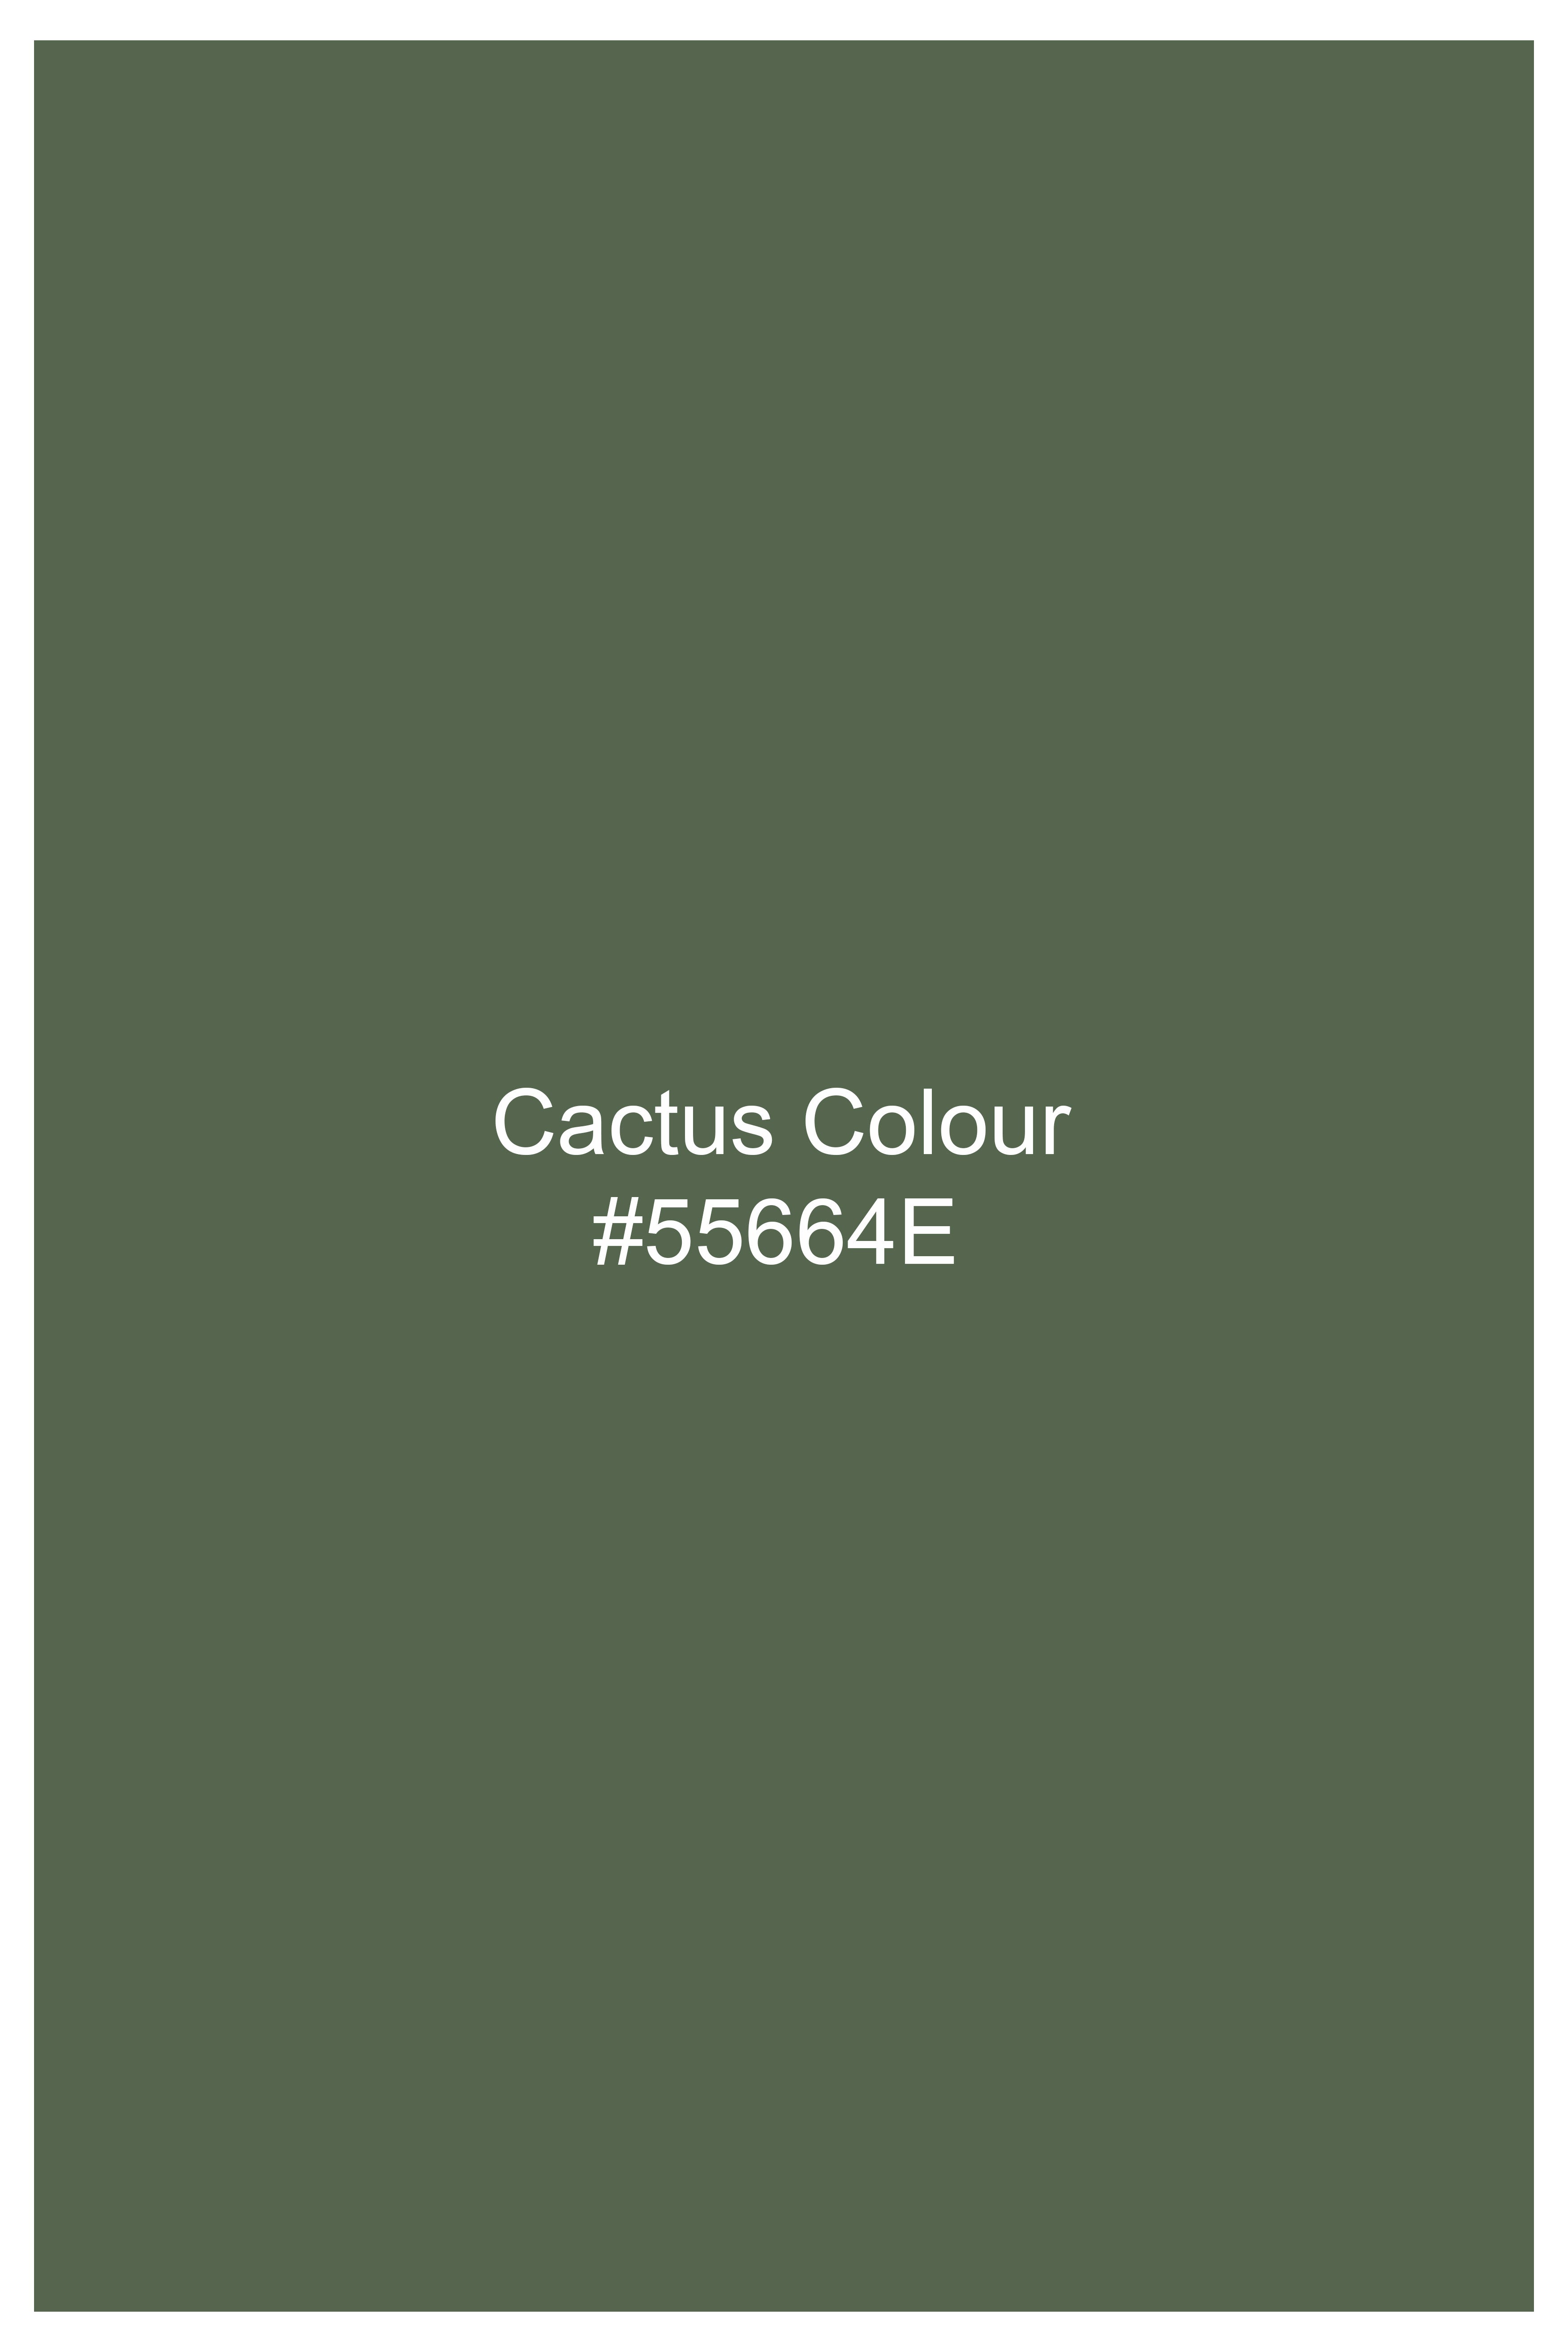 Cactus Green Dobby Textured Premium Giza Cotton Shirt 10310-38, 10310-H-38, 10310-39, 10310-H-39, 10310-40, 10310-H-40, 10310-42, 10310-H-42, 10310-44, 10310-H-44, 10310-46, 10310-H-46, 10310-48, 10310-H-48, 10310-50, 10310-H-50, 10310-52, 10310-H-52